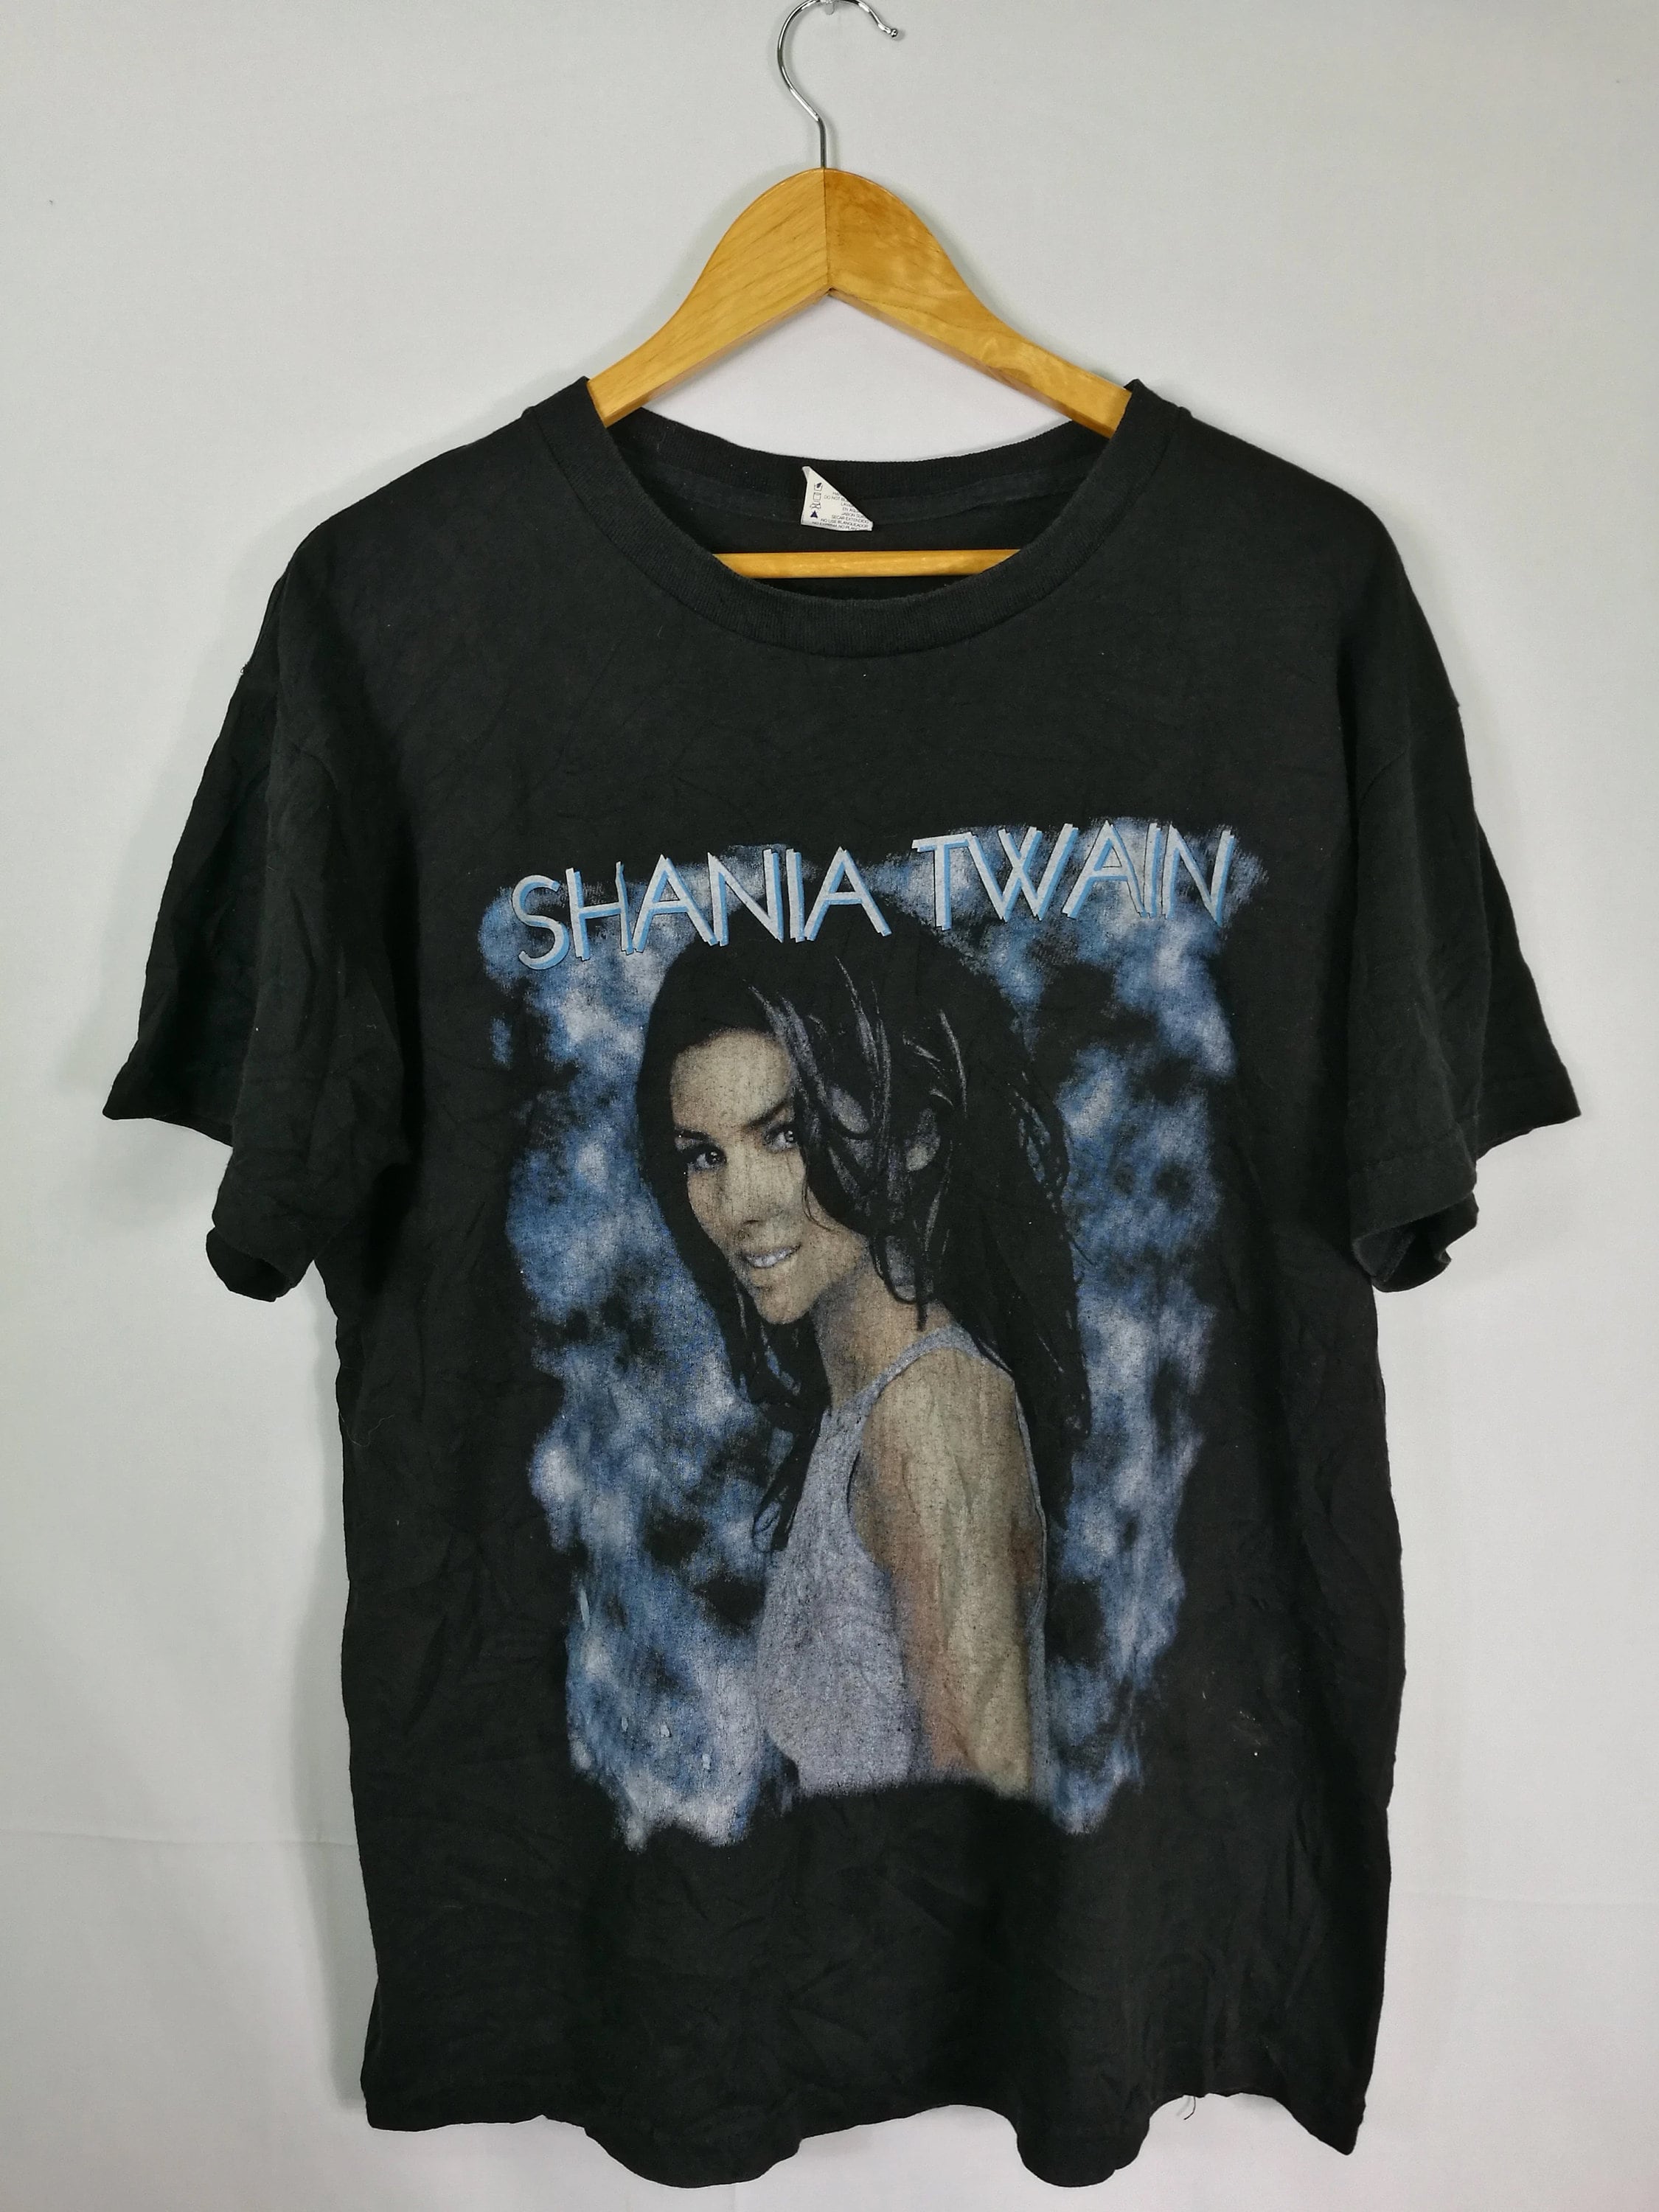 Shania Twain tour t shirt, Shania Twain 90s Concert T Shirt sold by ...